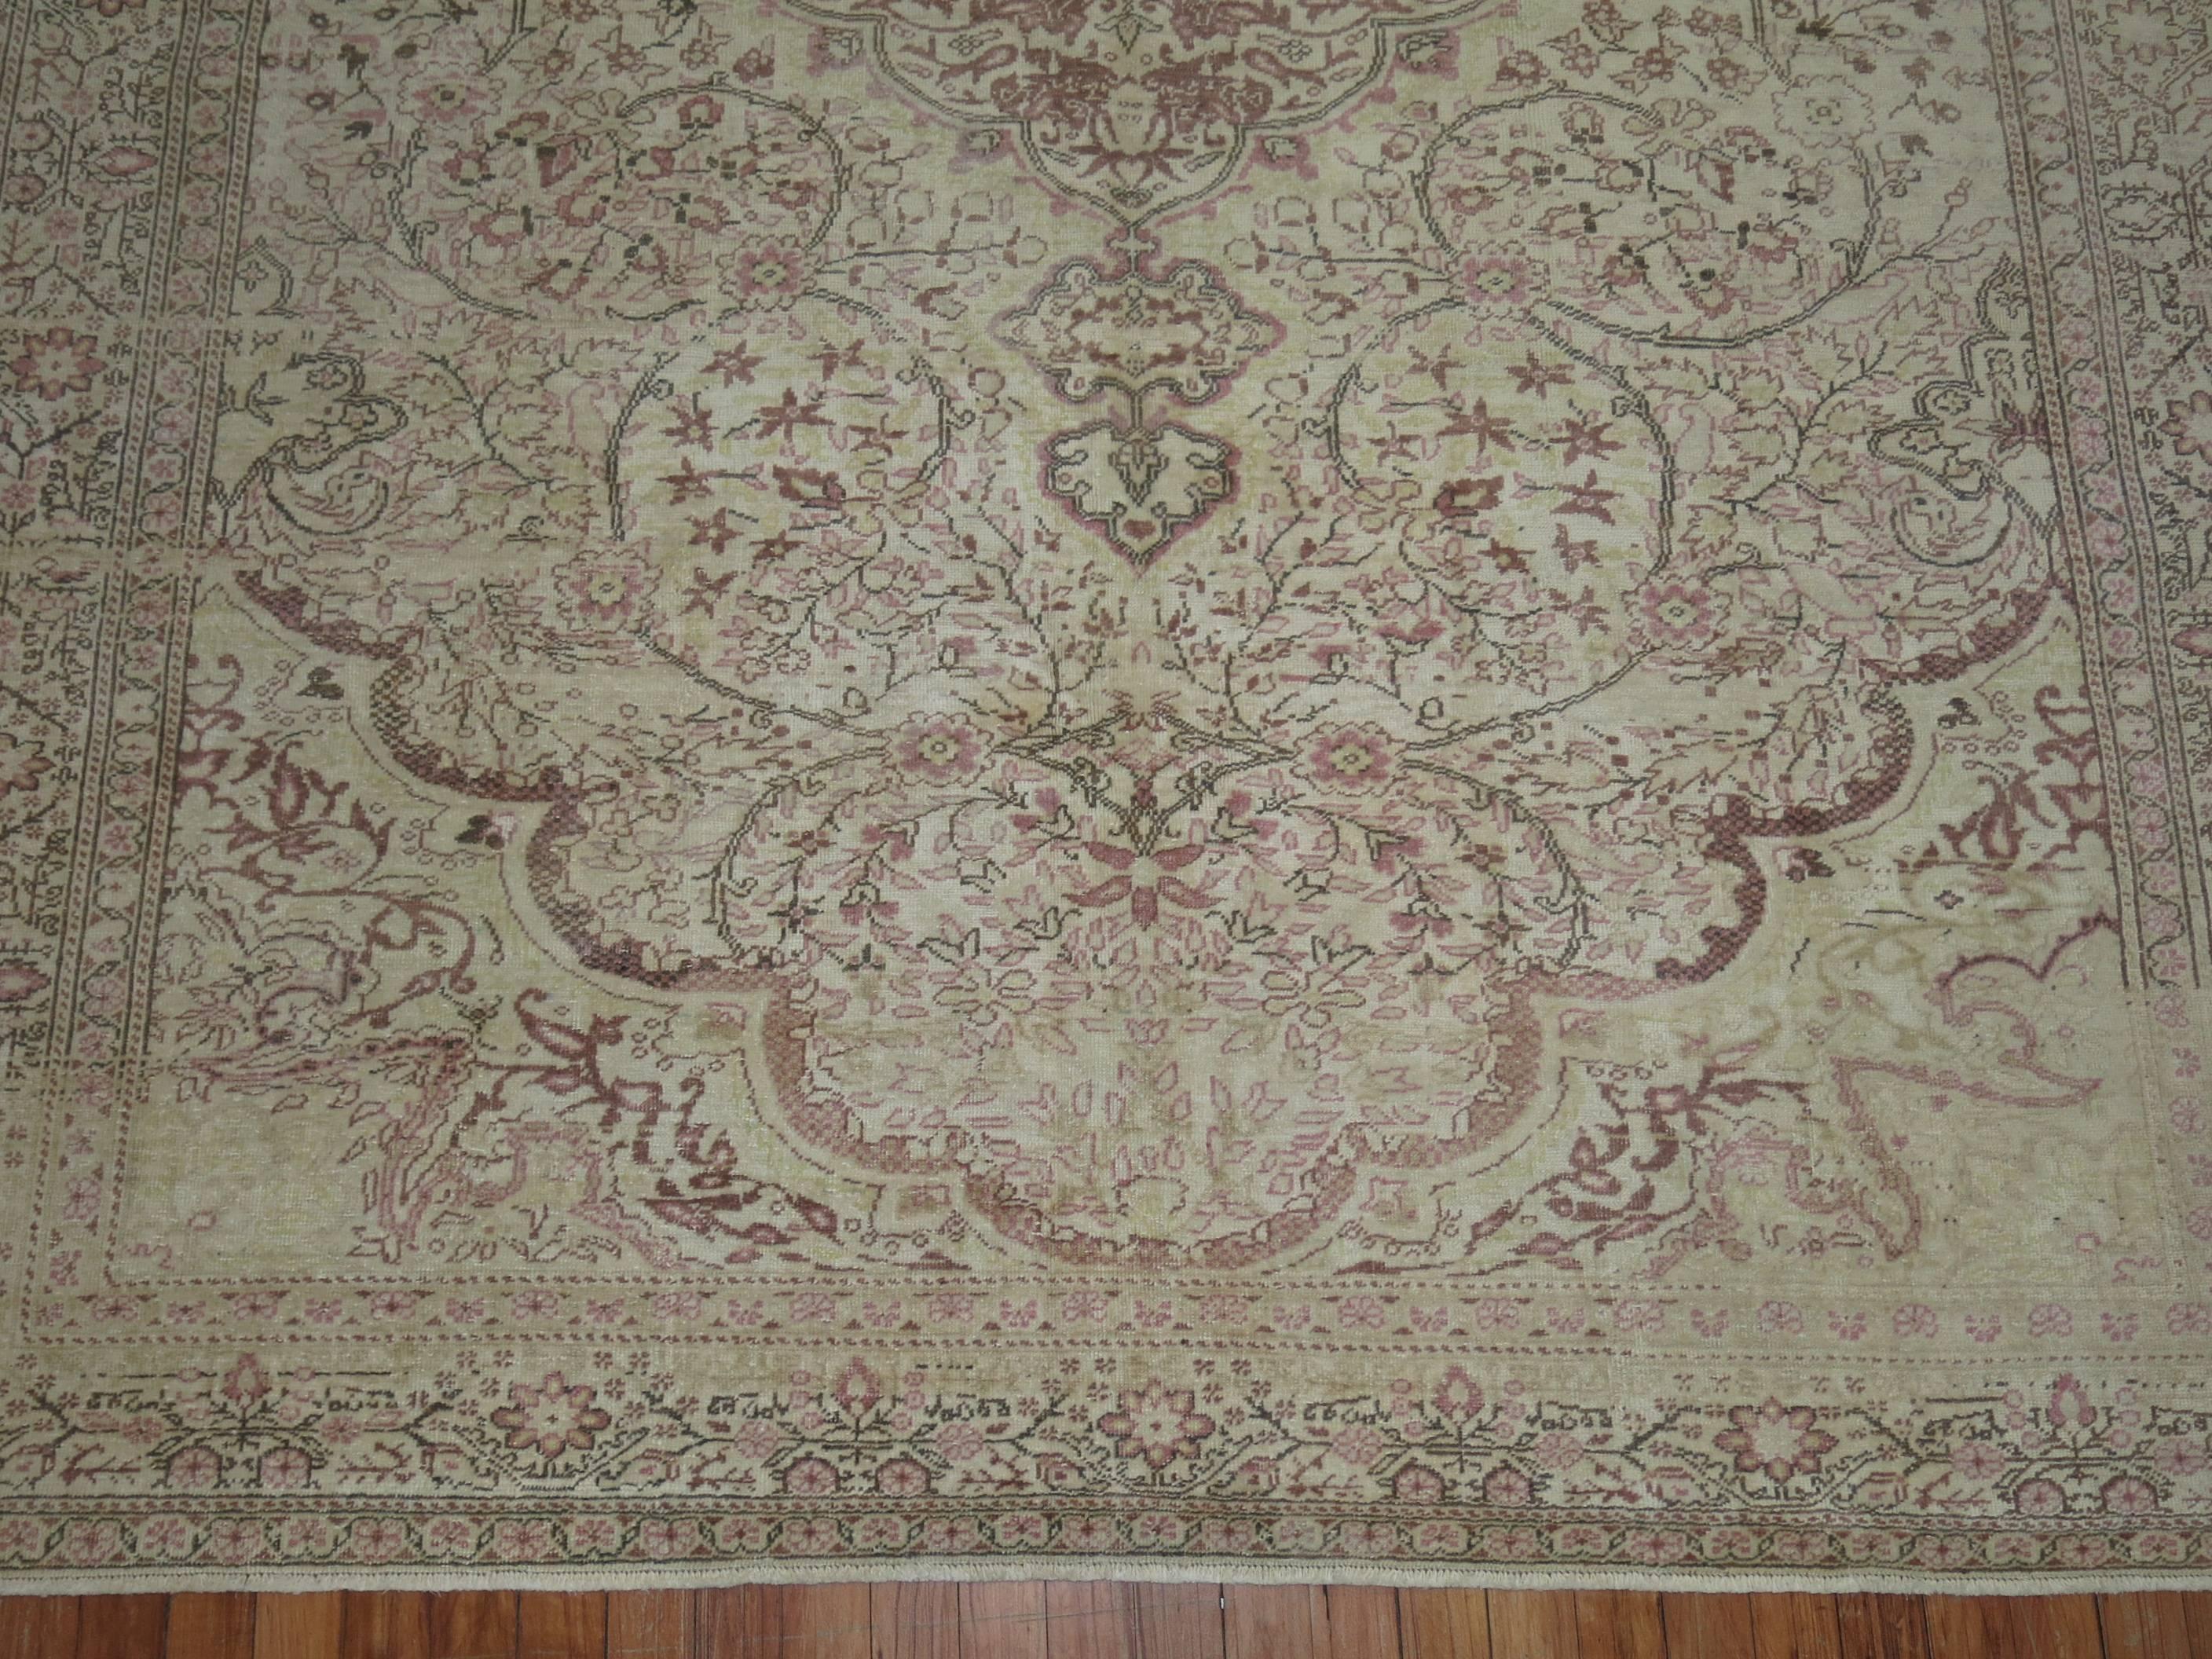 Vintage Turkish Sivas rug in white and raspberry tones.

6'3'' x 9'5''